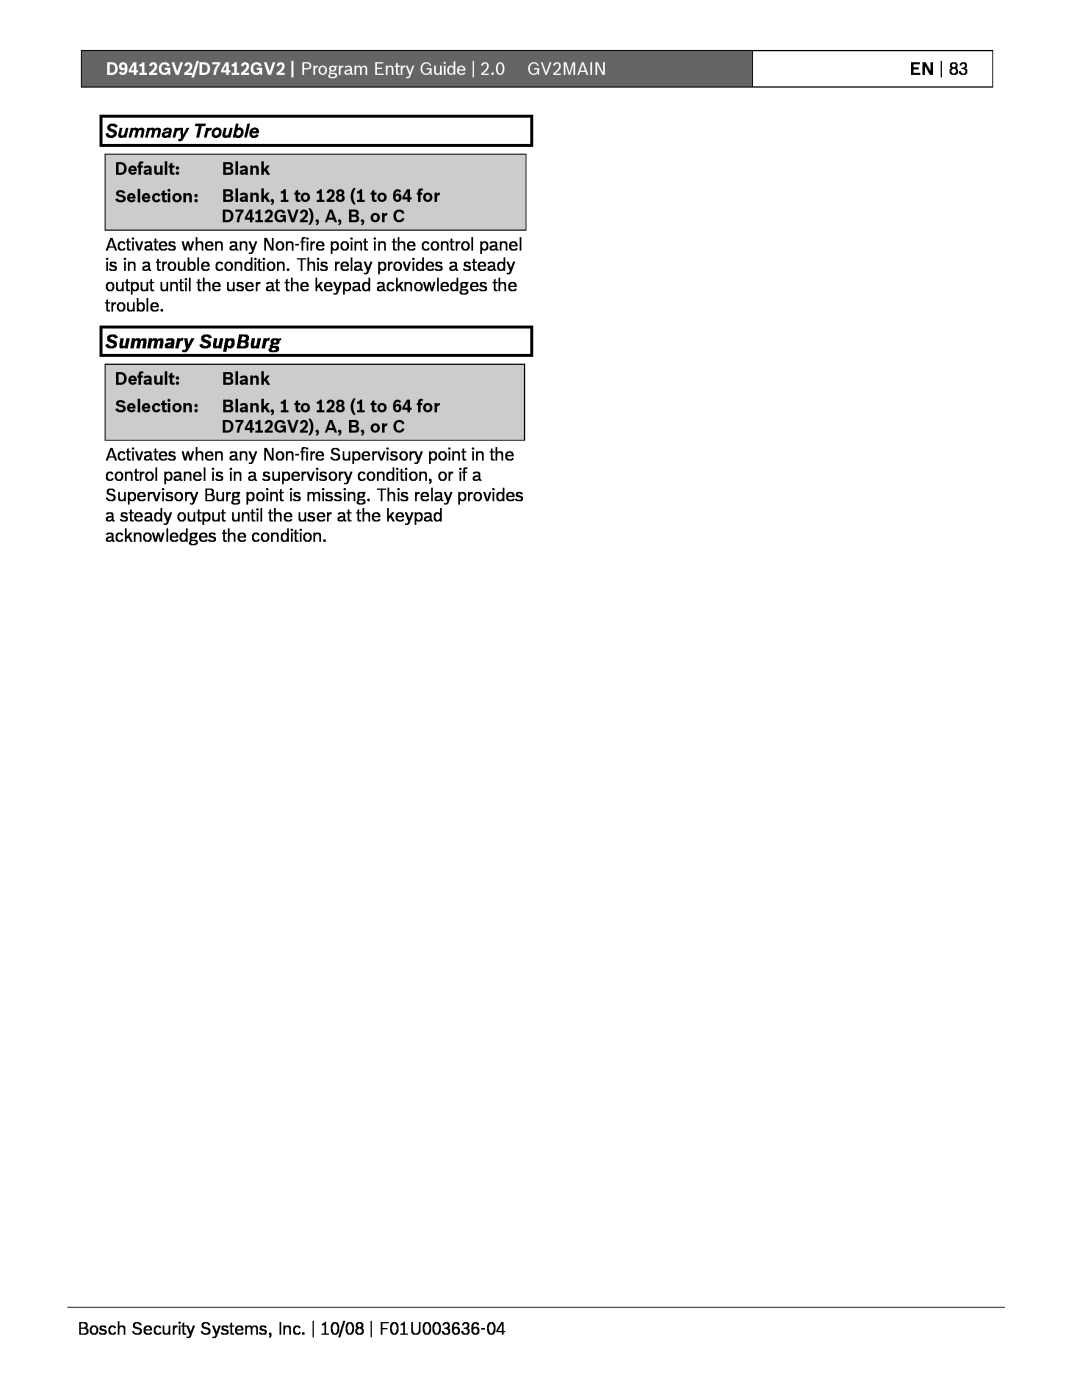 Bosch Appliances D9412GV2 manual Summary Trouble, Summary SupBurg 